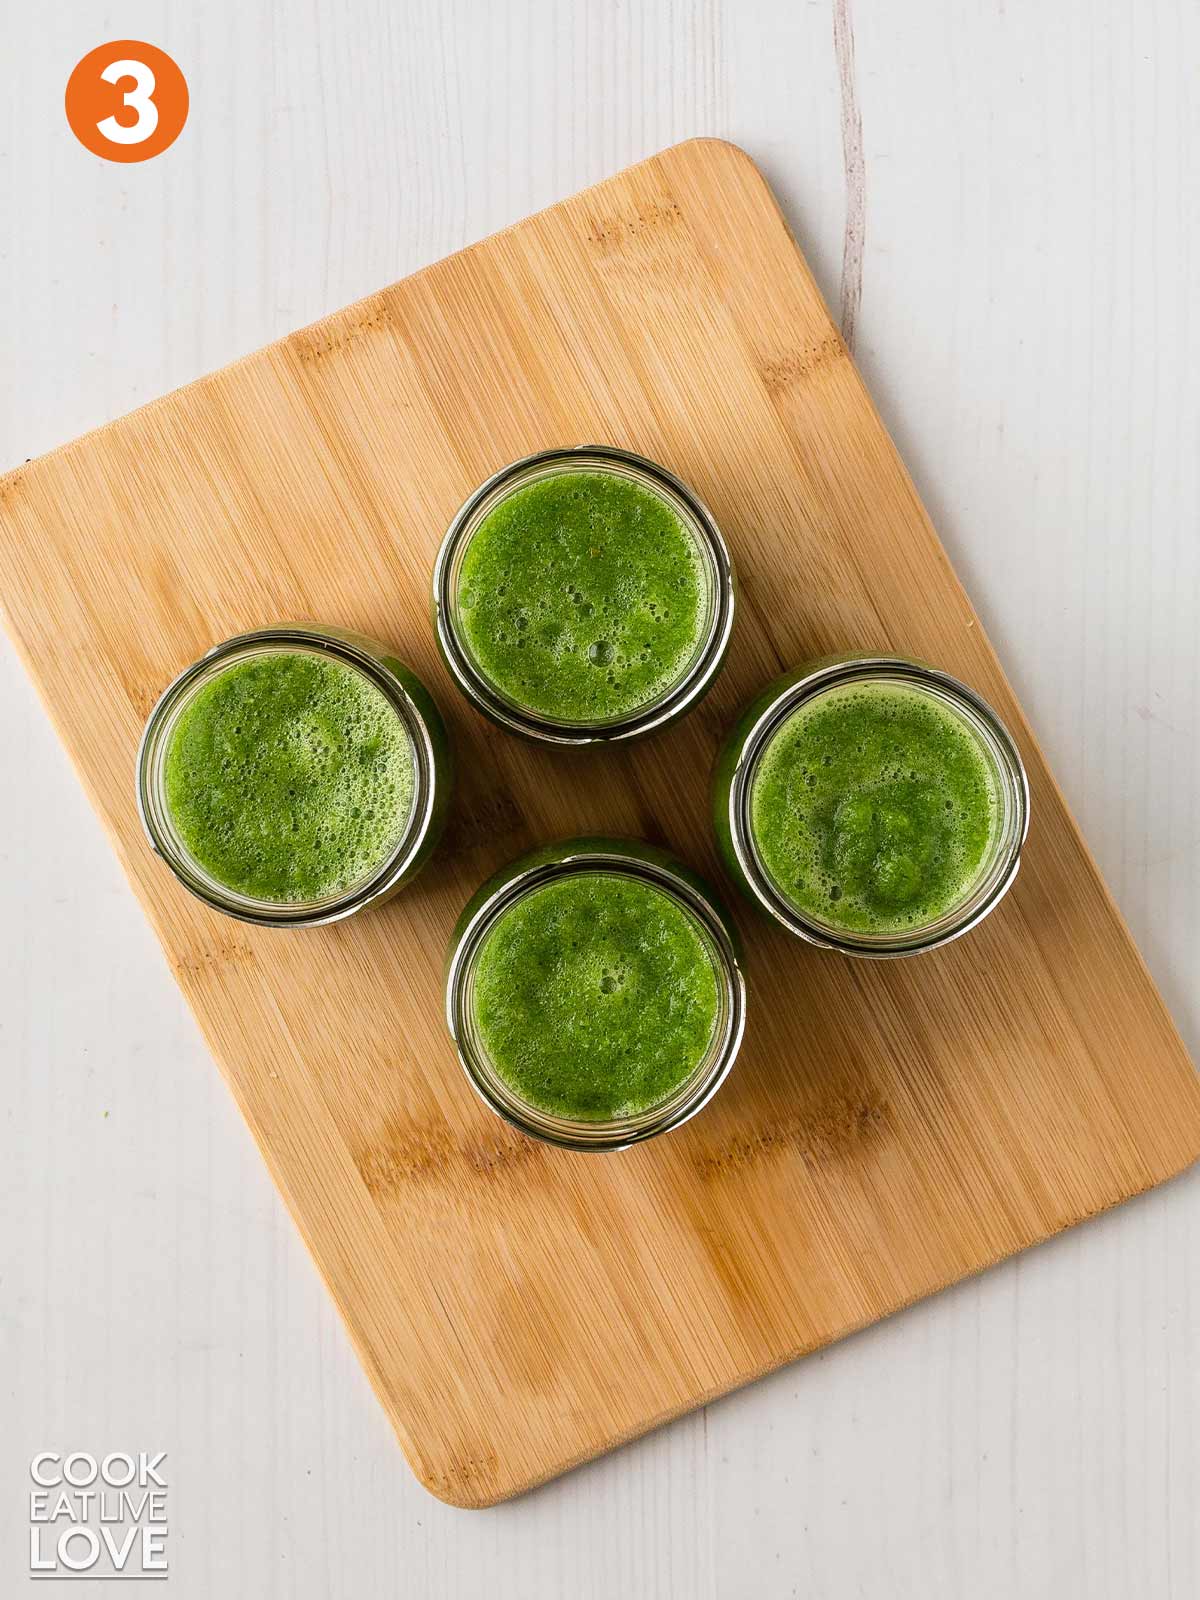 Green smoothie base in jars.